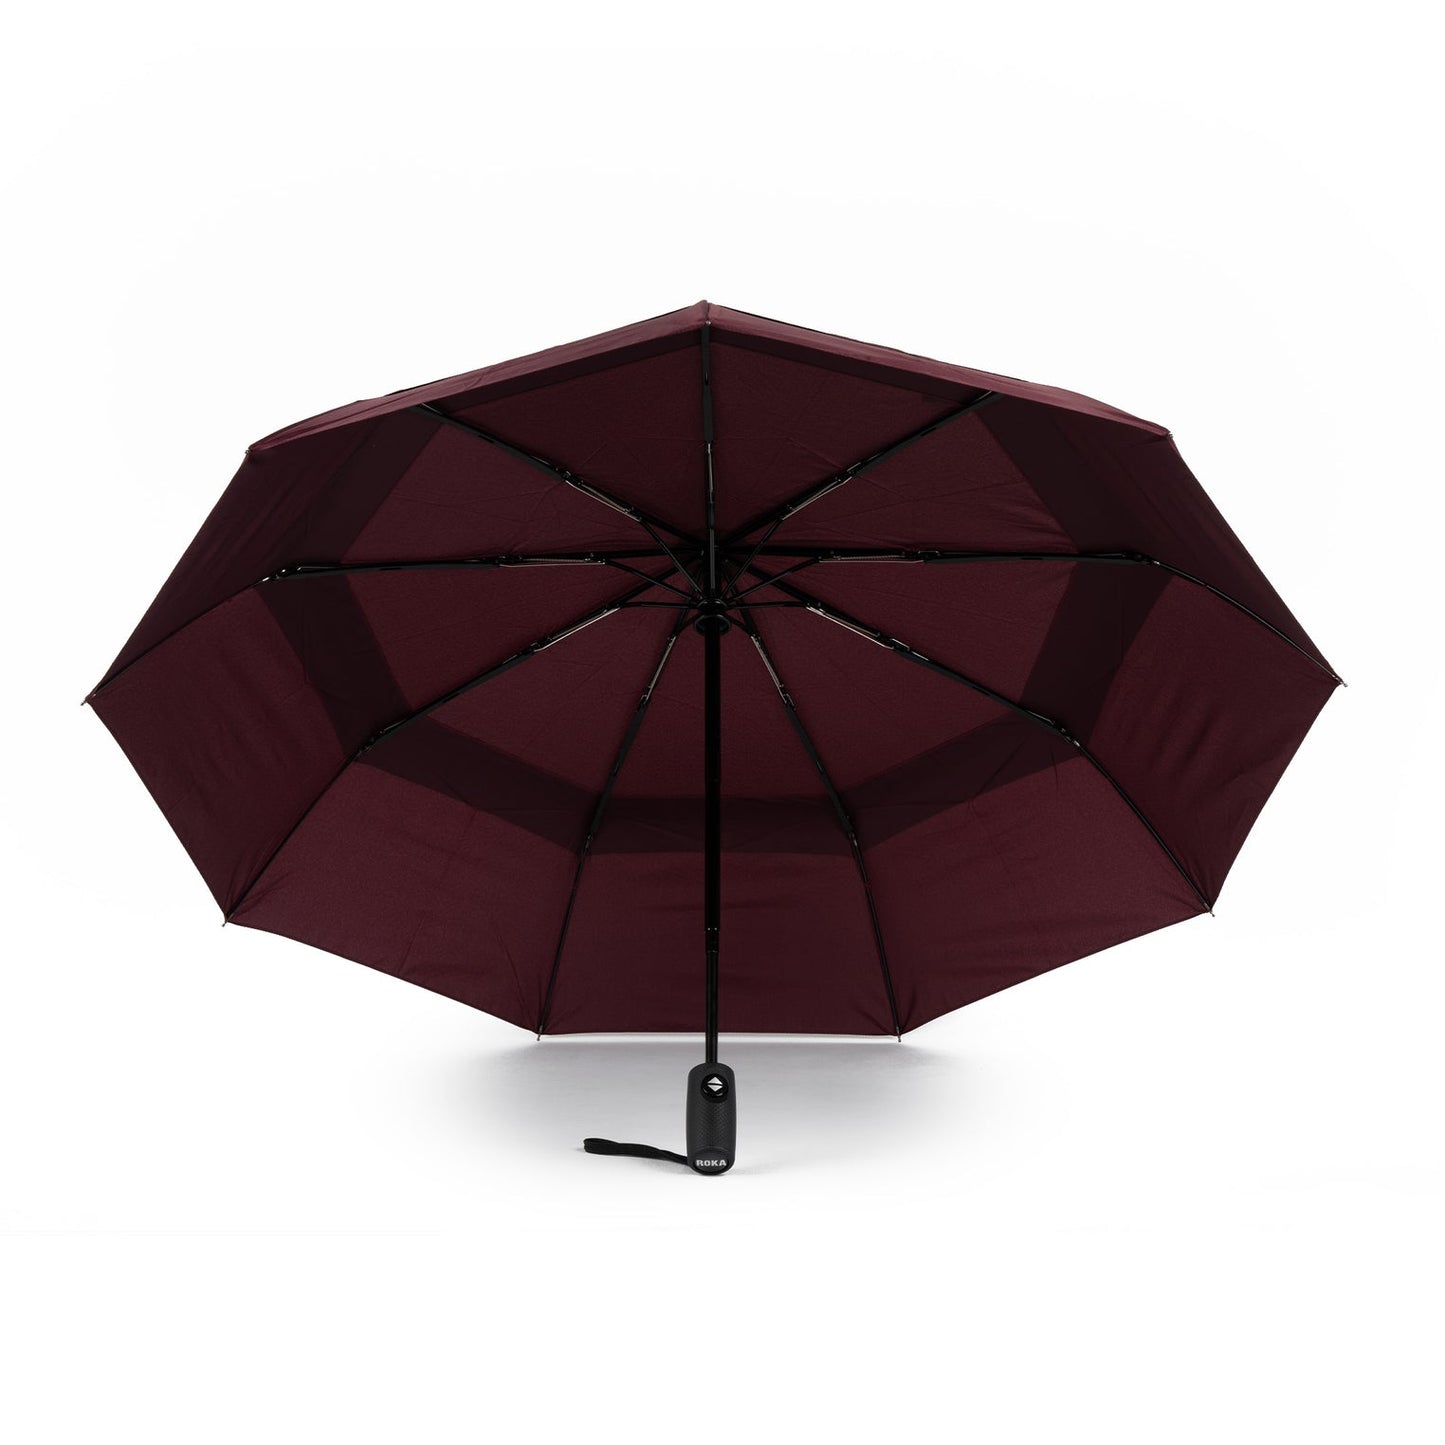 Waterloo plum - recycled & eco-friendly umbrella